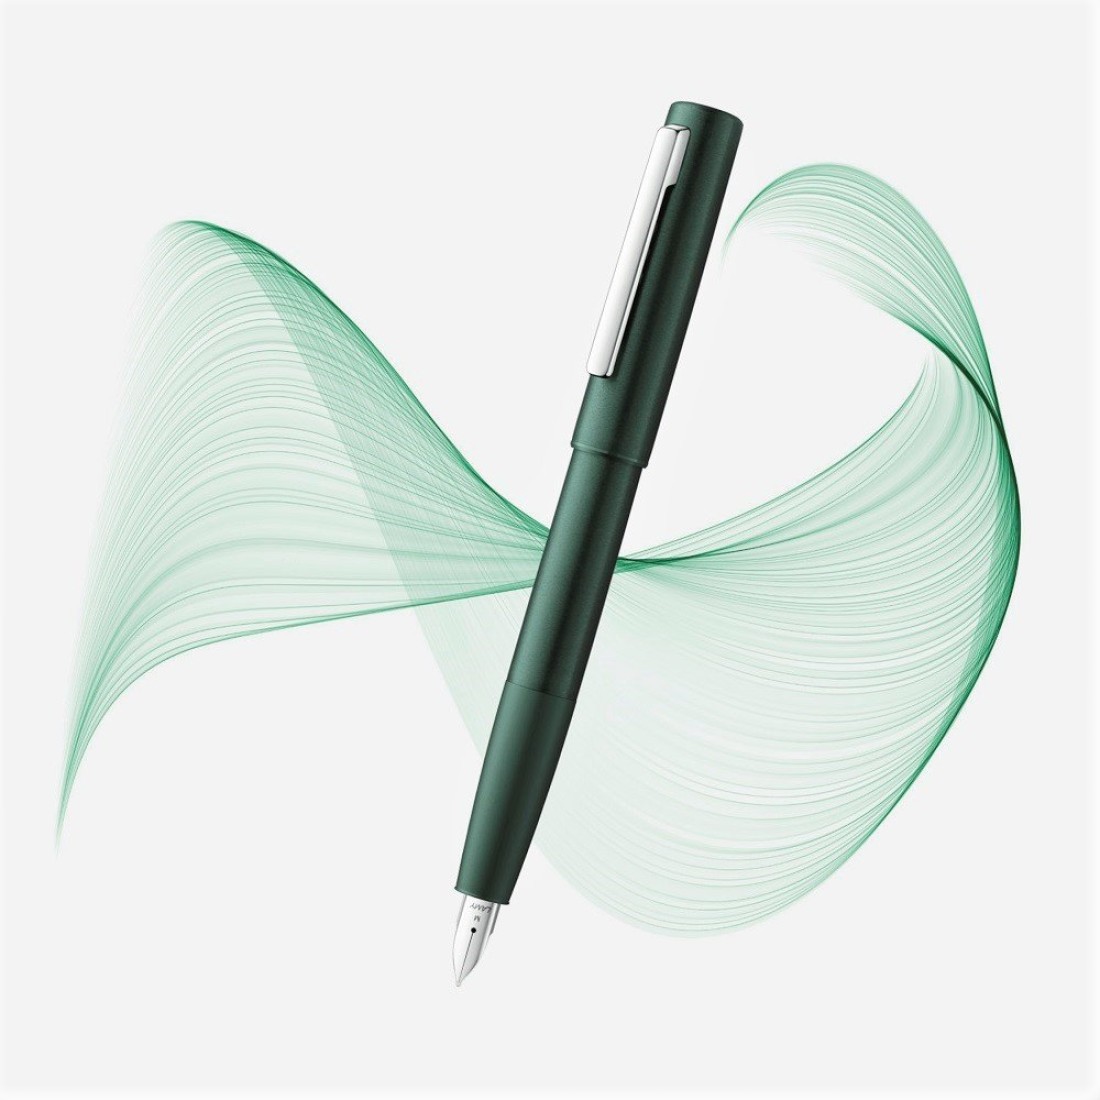 Lamy Aion Dark Green Fountain pen